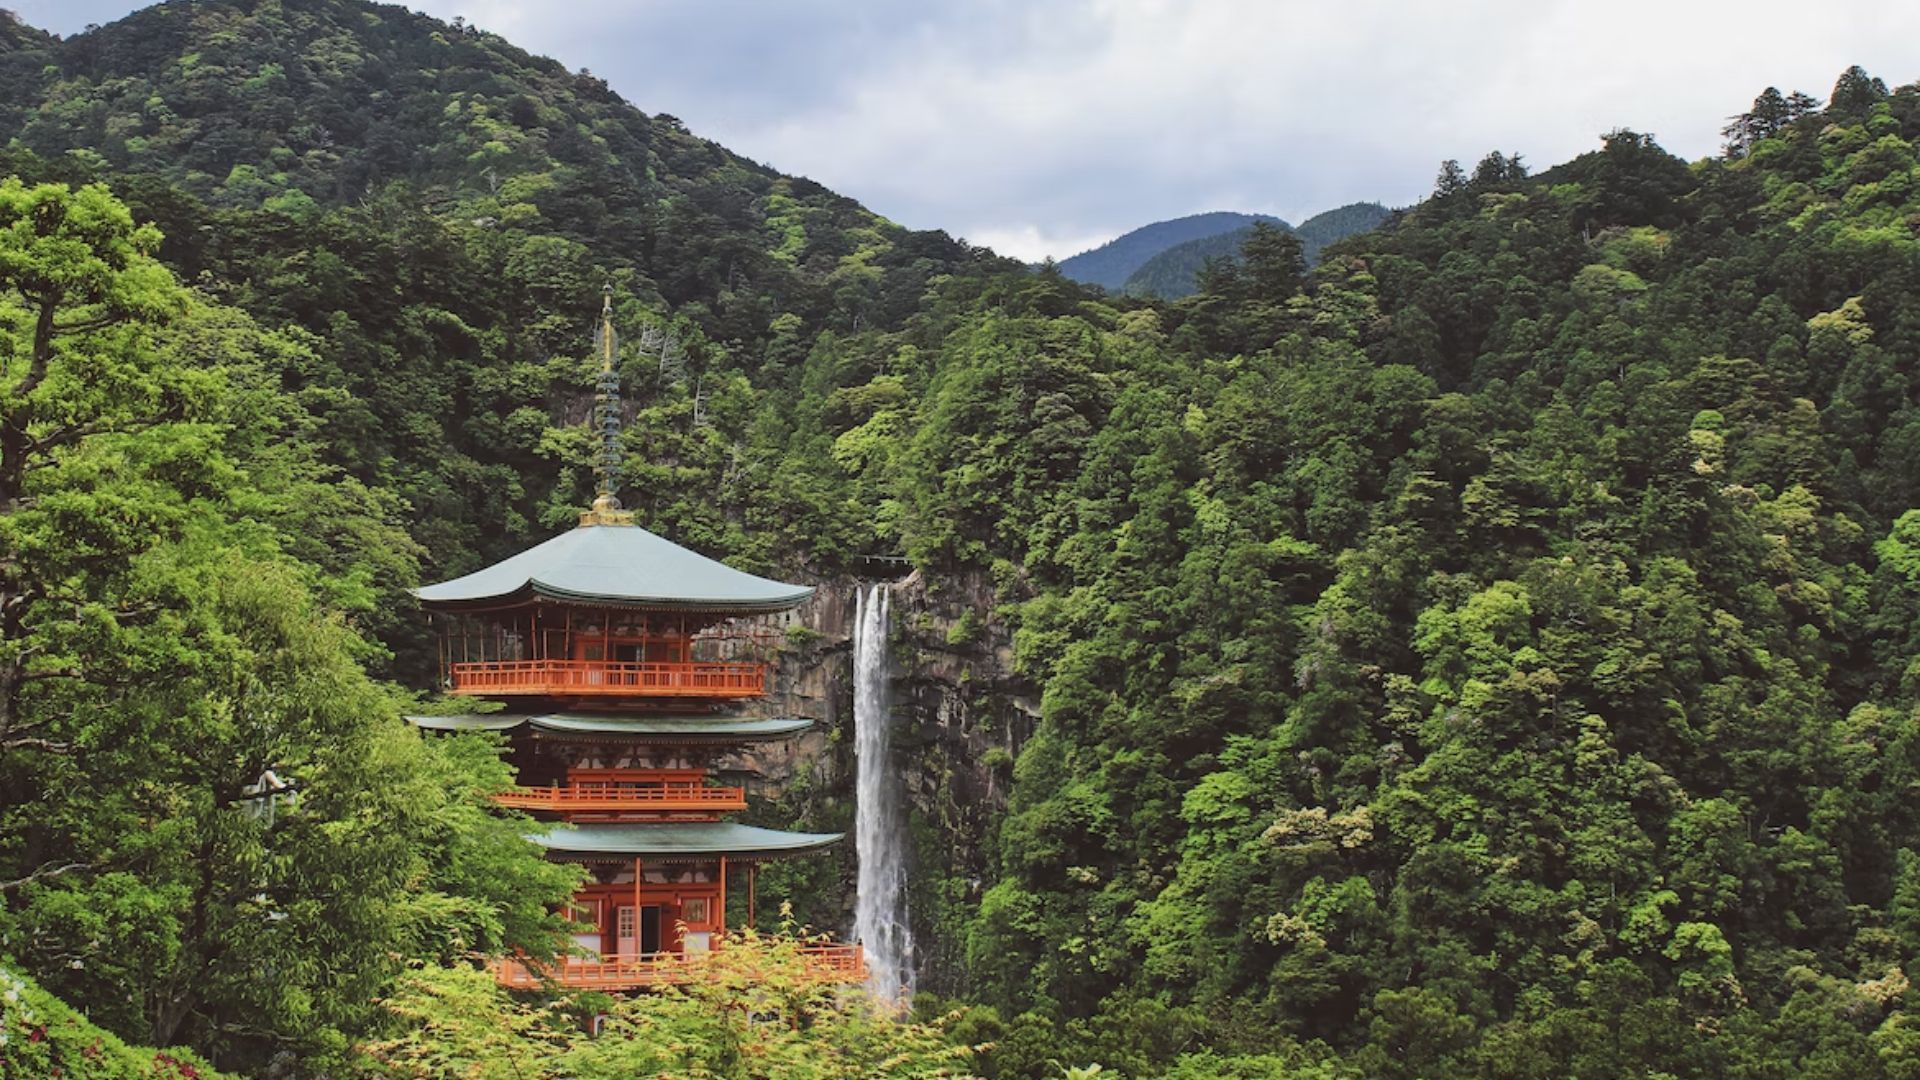 Kumano Kodo most beautiful destinations in Asia